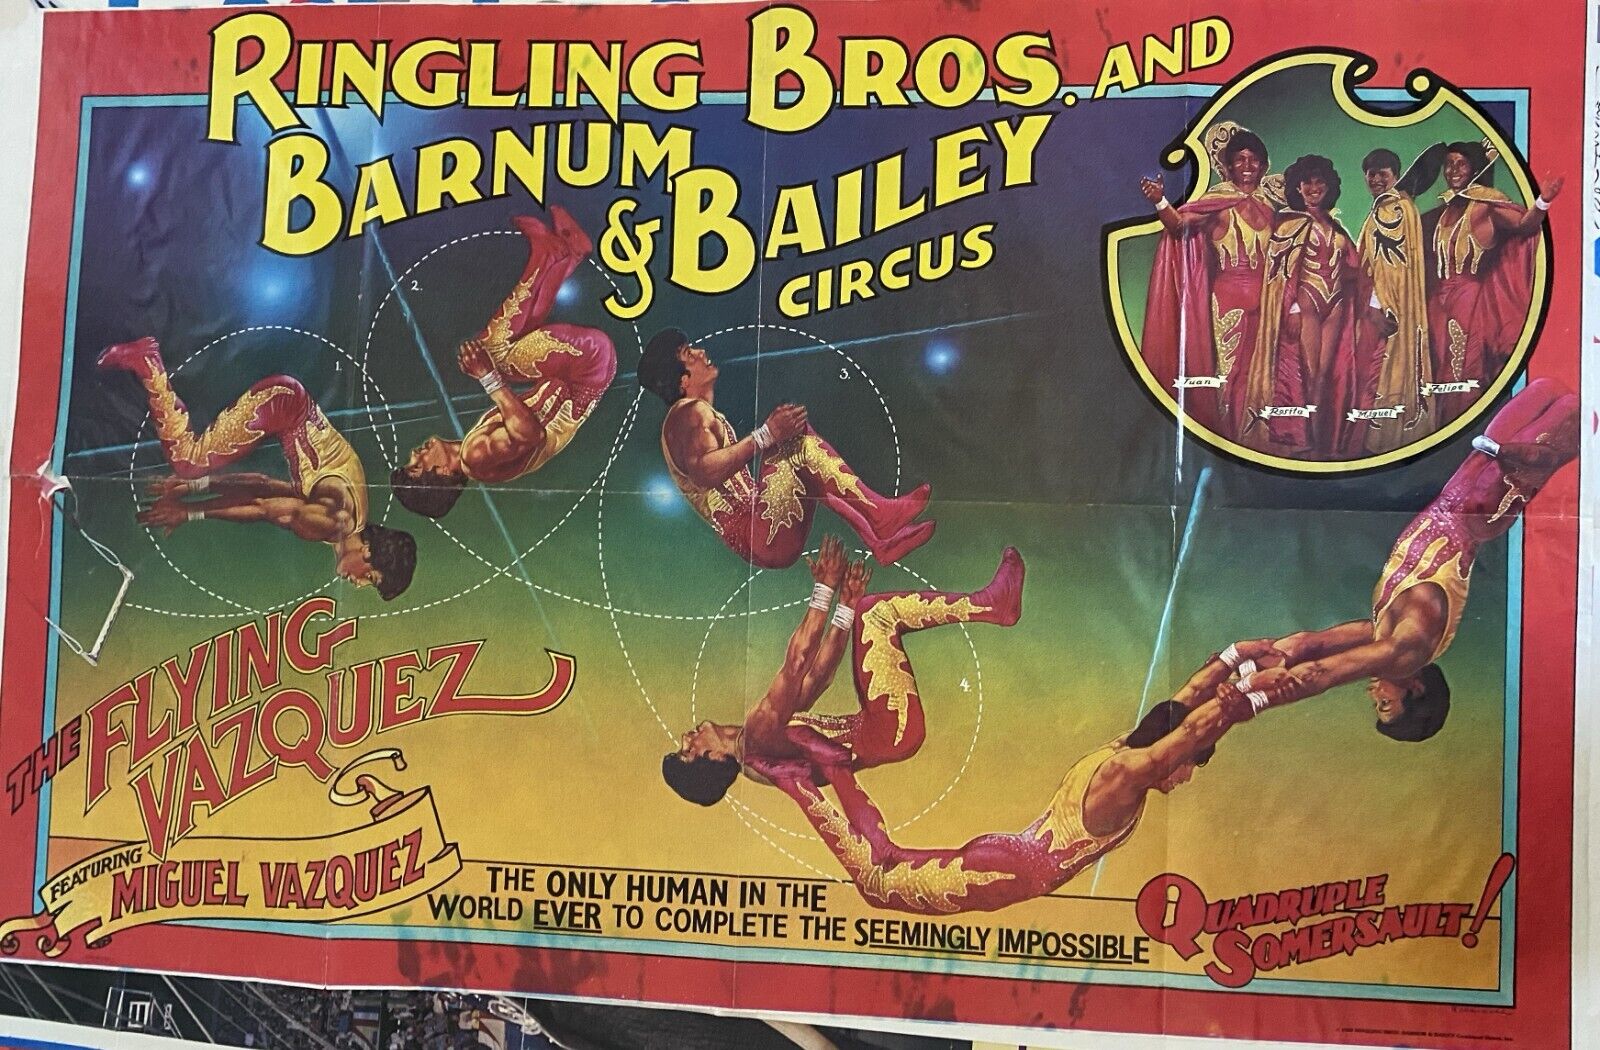 Authentic 1983 Ringling Bros Barnum & Bailey Circus Poster FLYING MIGUEL VASQUEZ